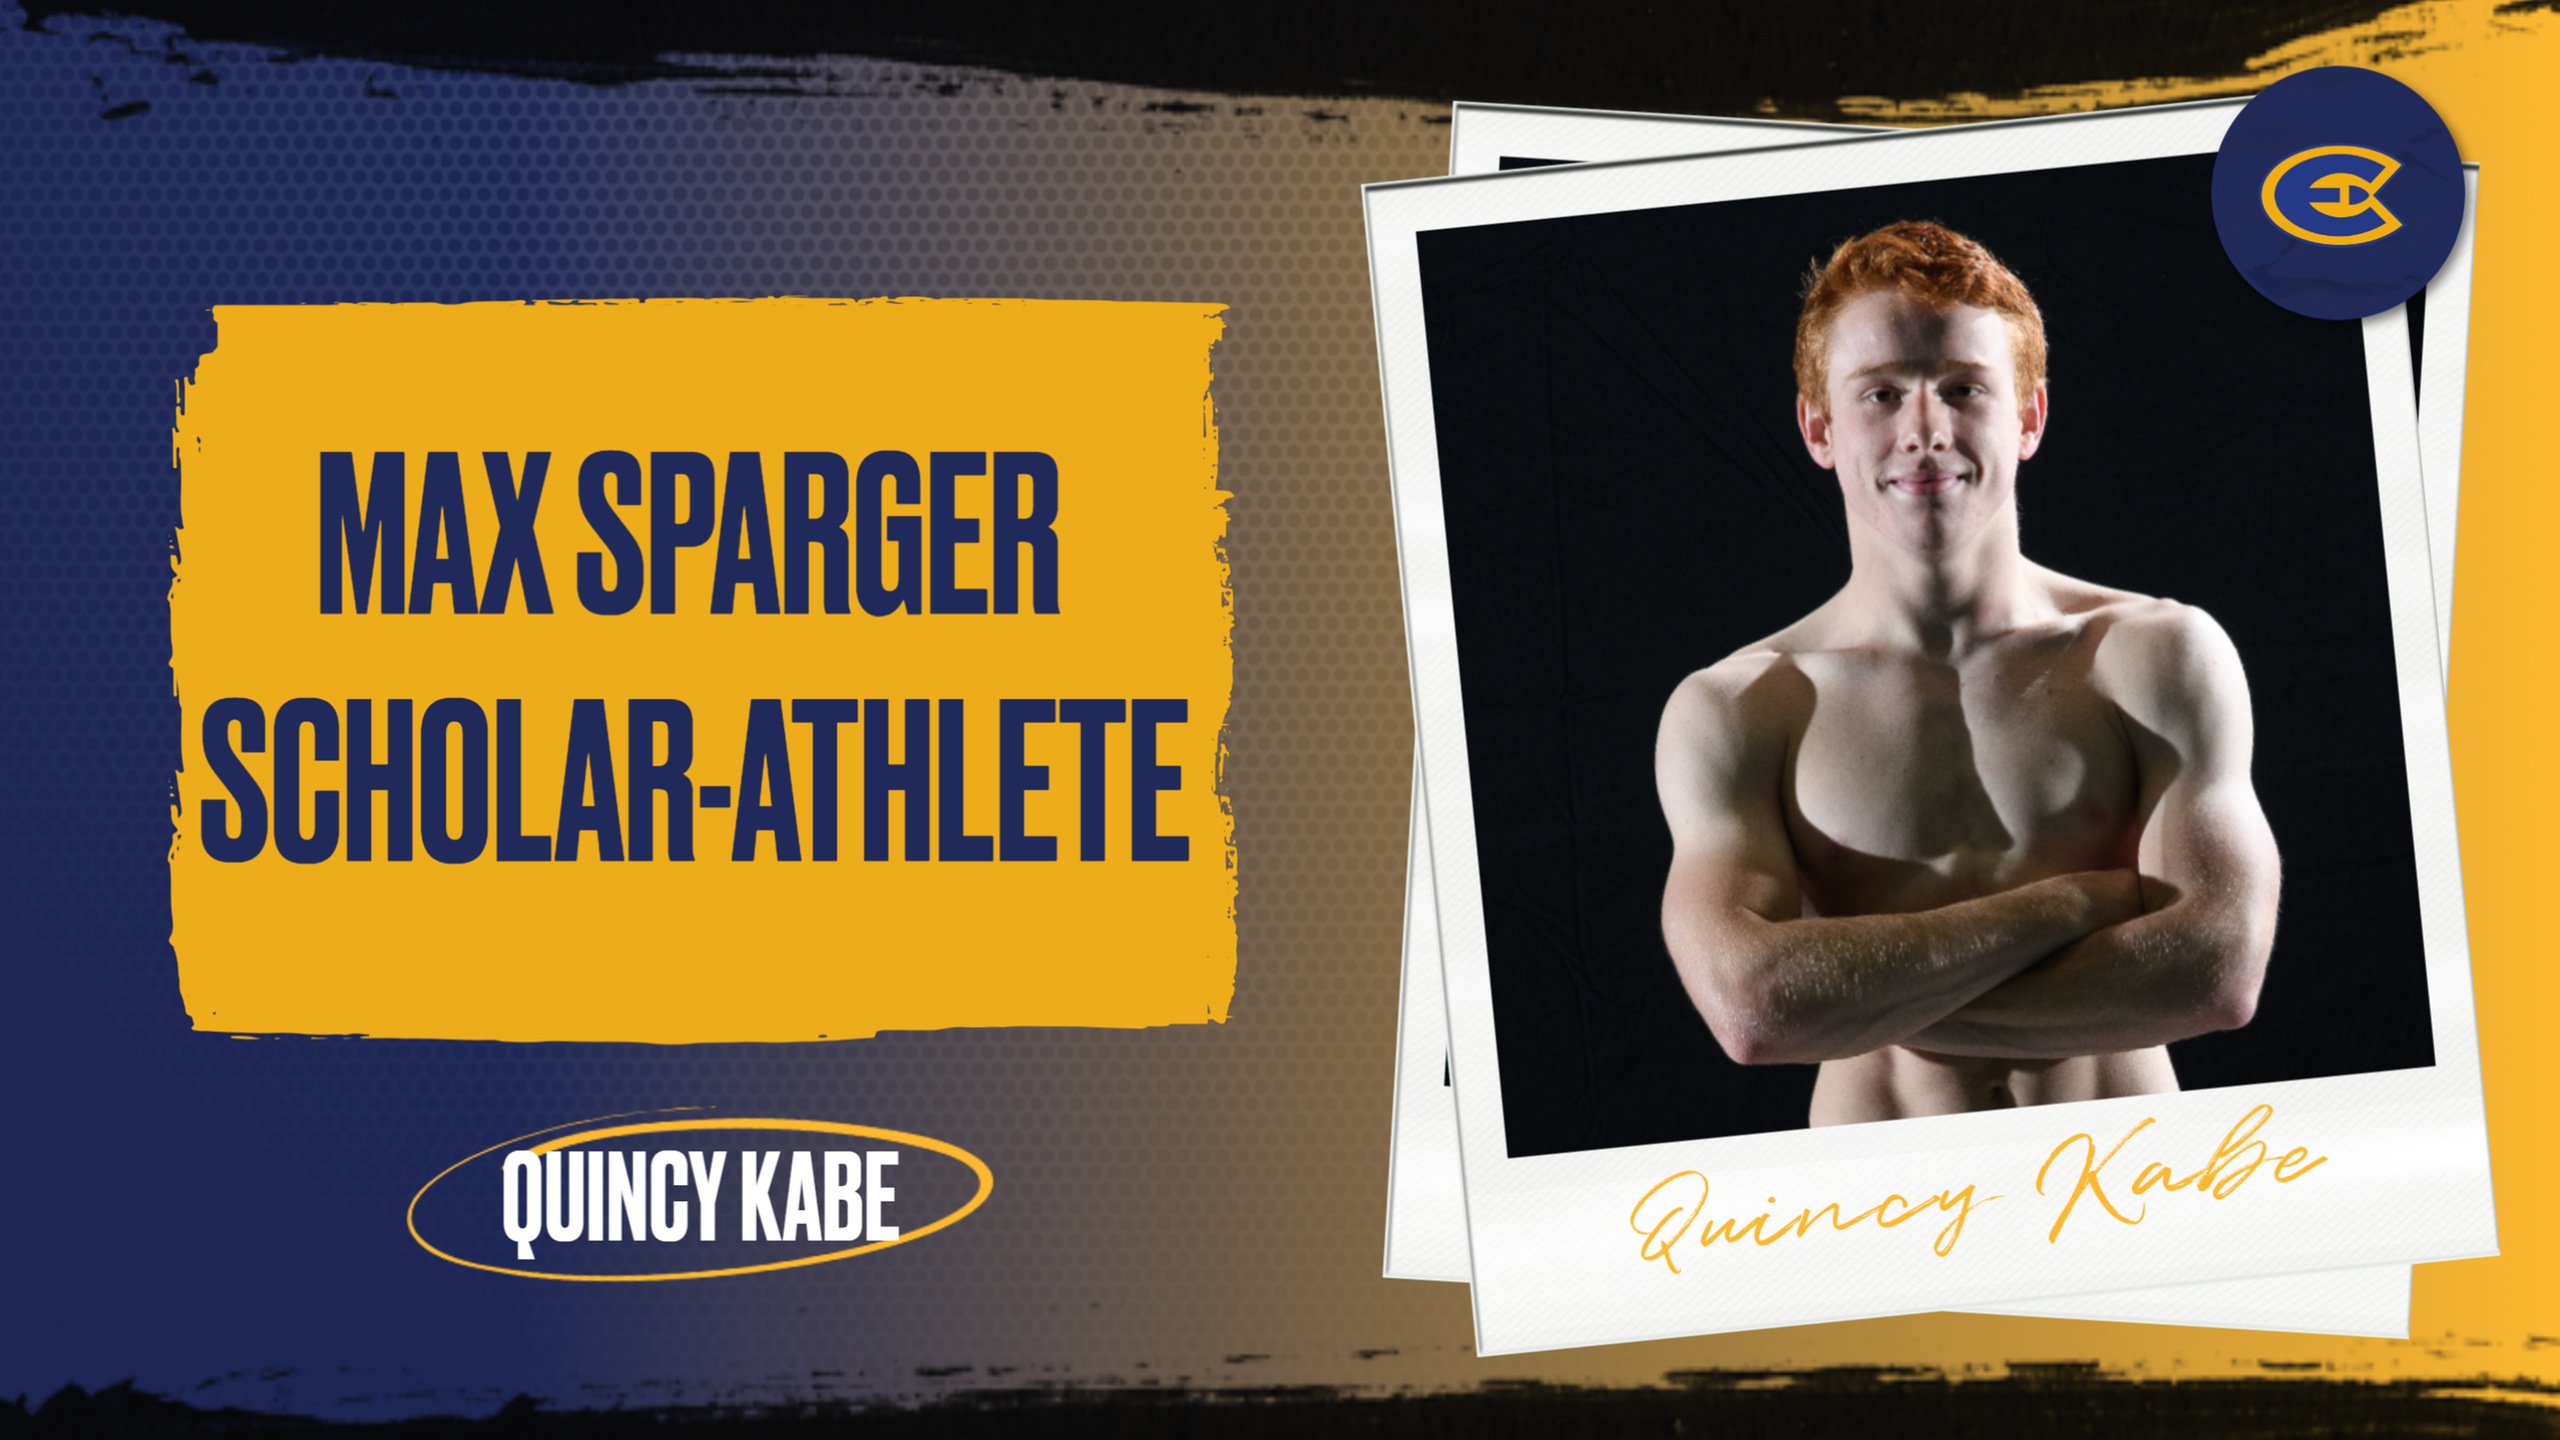 Kabe named Max Sparger Scholar-Athlete